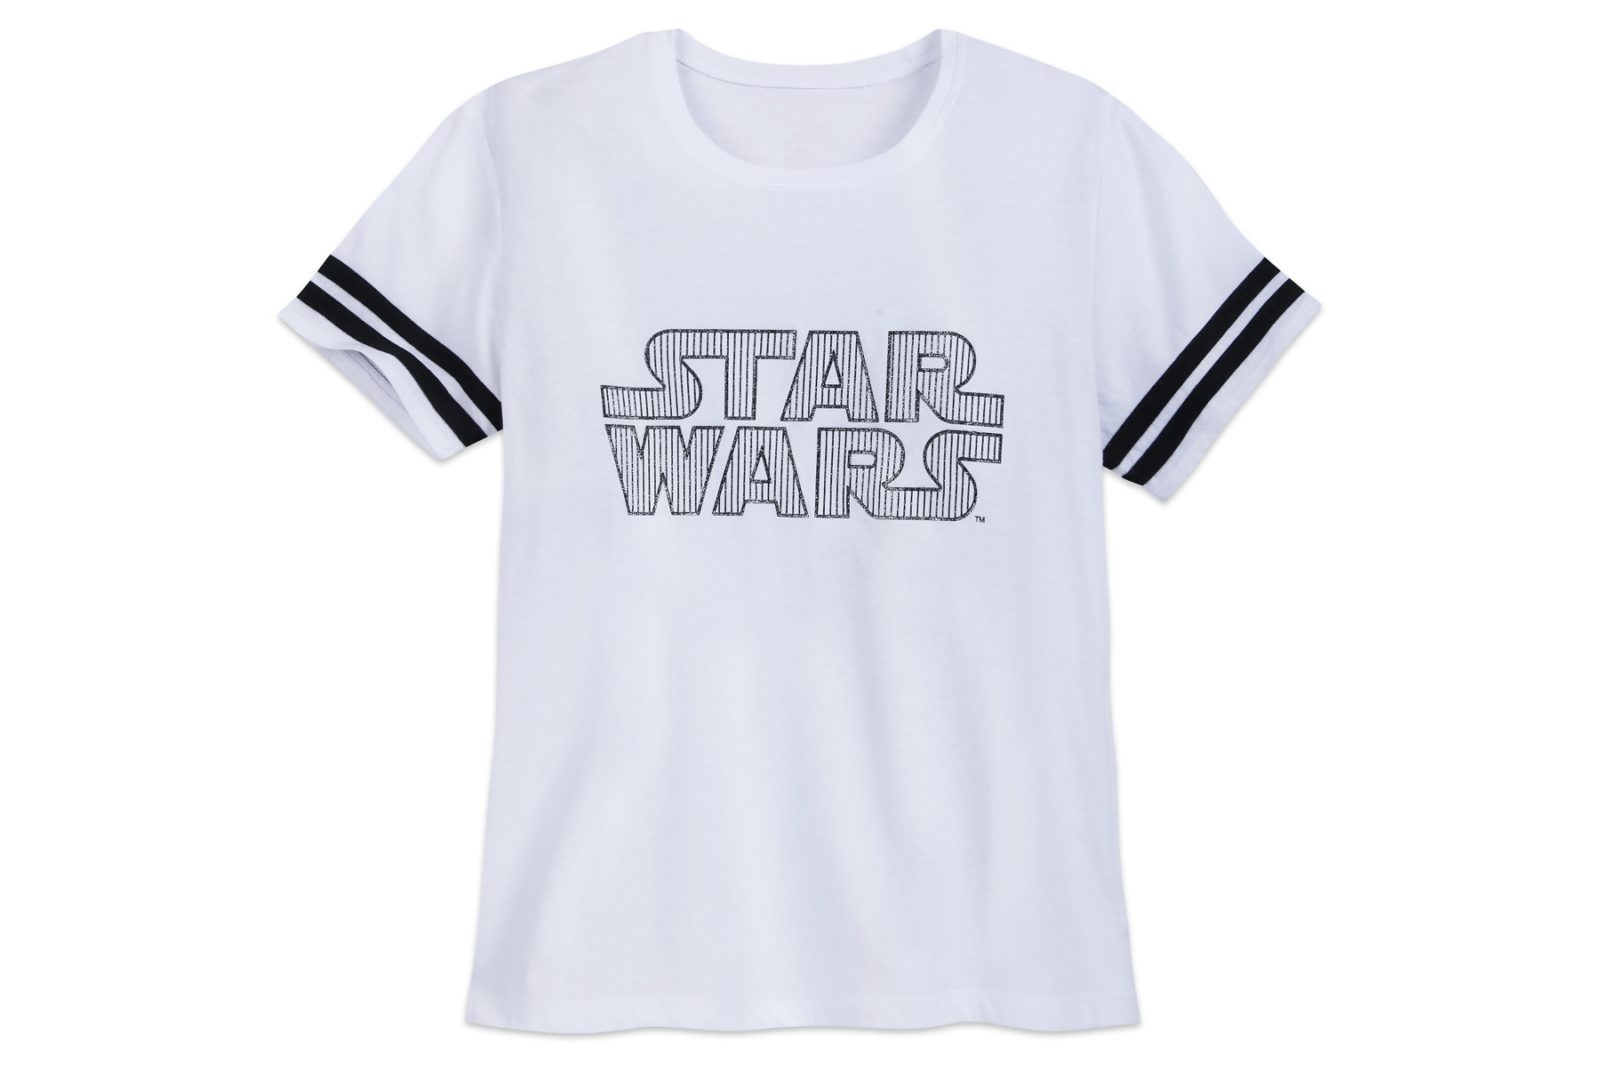 Women's Star Wars Glitter Logo T-Shirt at Shop Disney